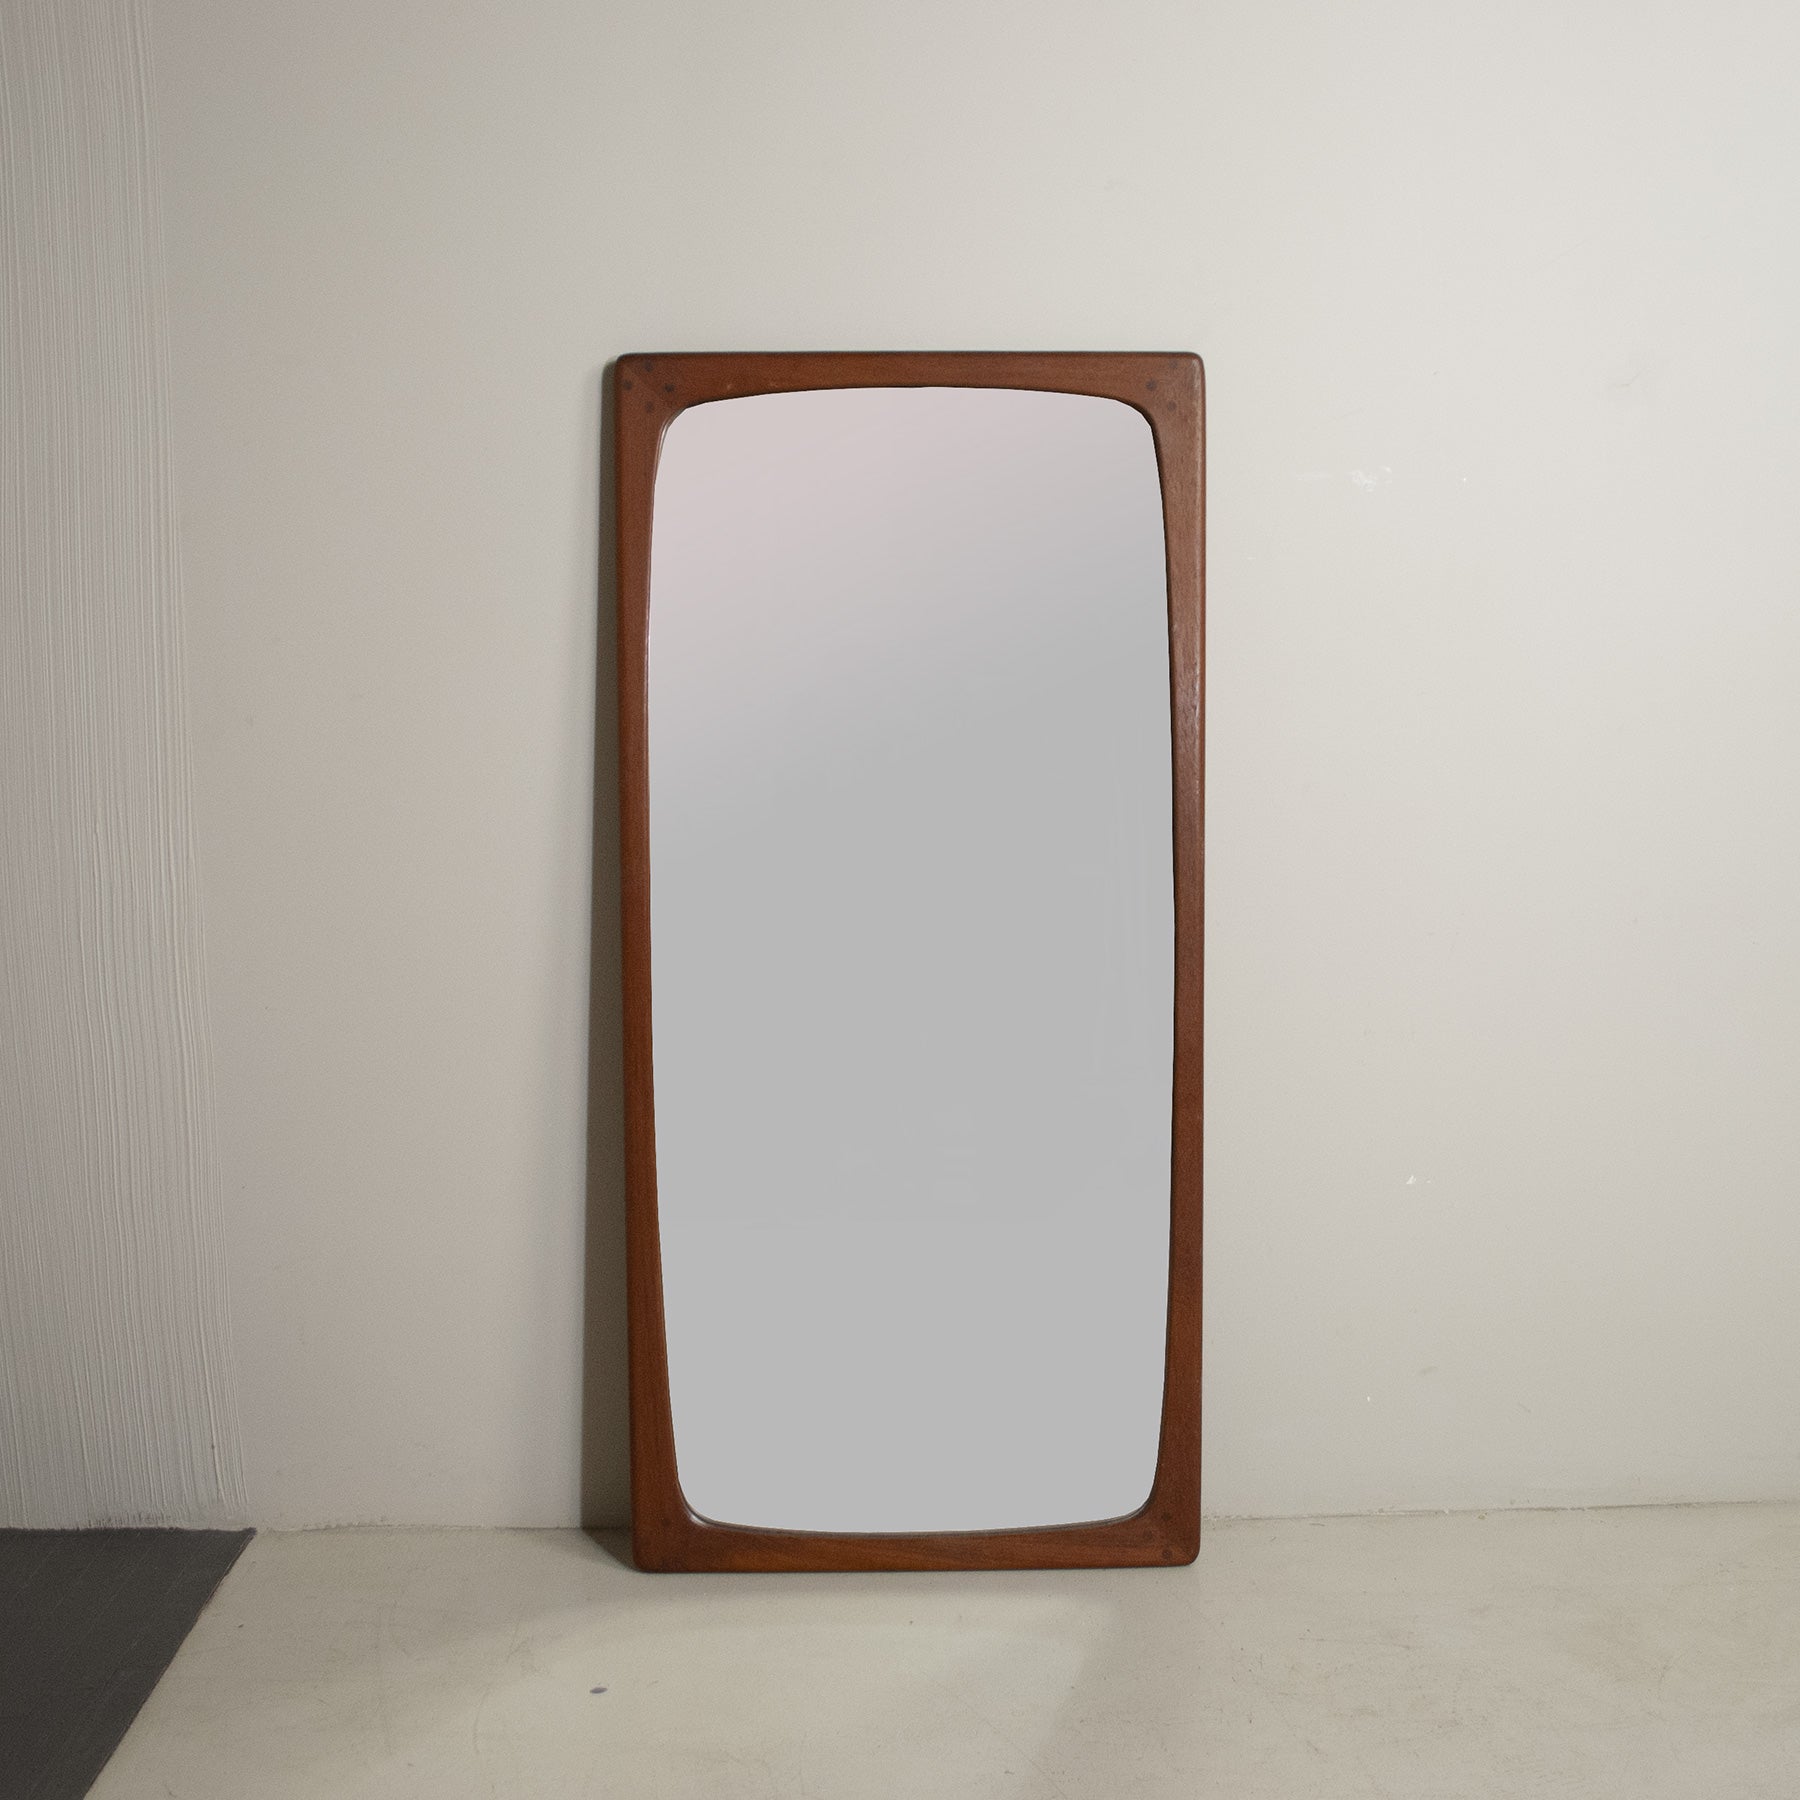 Miroir forme rectangulaire 60's cadre en bois de teck, Isa Bergamo fin des années soixante.